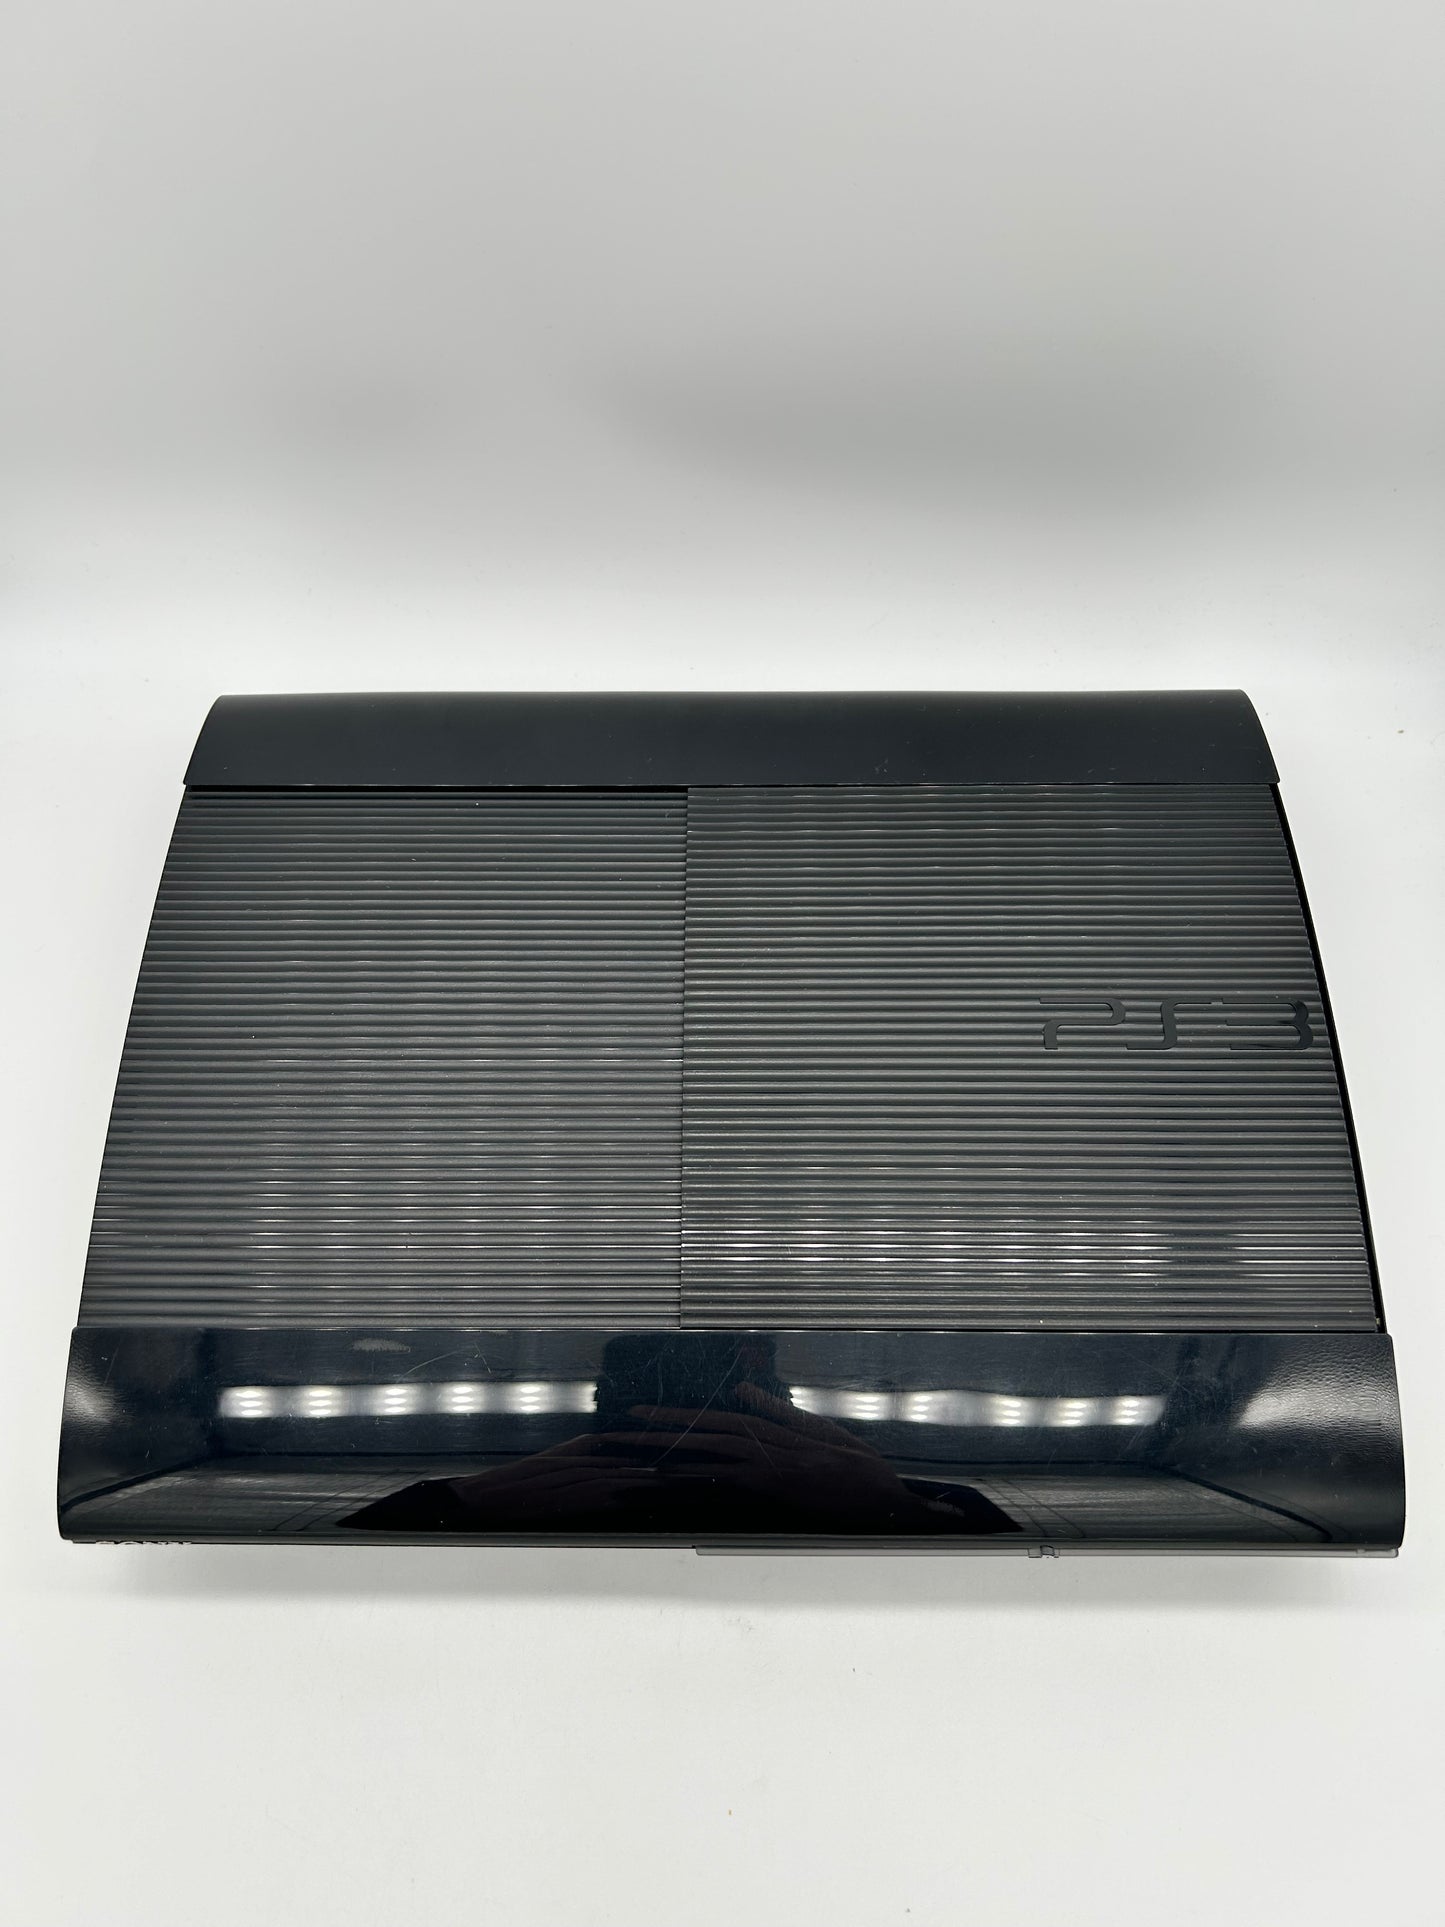 SONY PLAYSTATiON 3 [PS3] CONSOLE | ORIGINAL BLACK SUPER SLiM 500GB LEGO THE HOBBiT BUNDLE | CECH-4201C